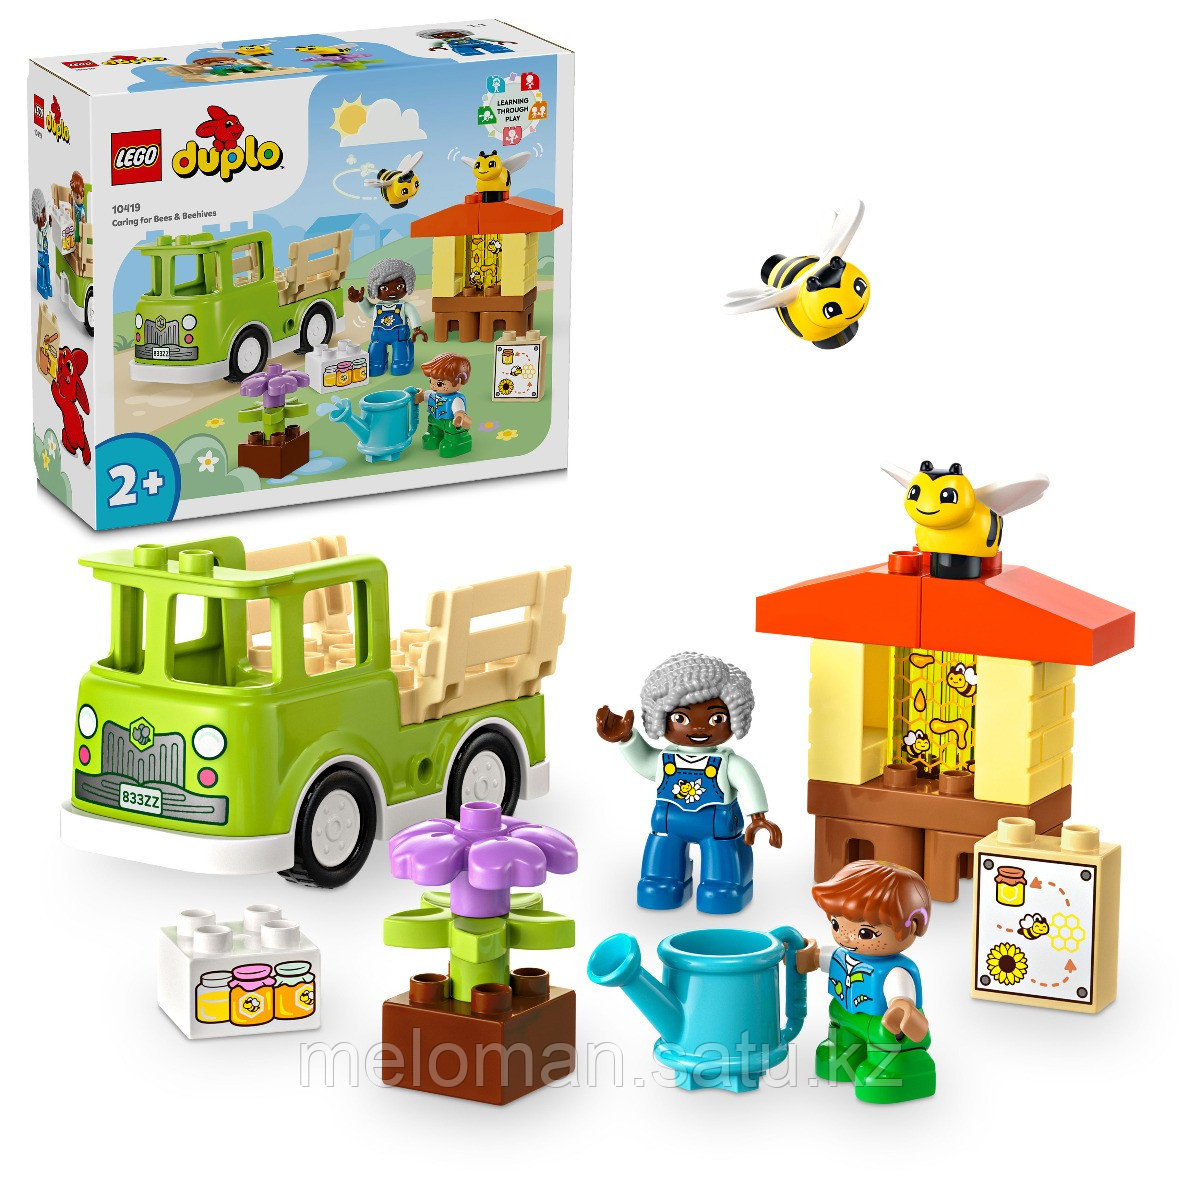 LEGO: Пчелиная ферма DUPLO 10419